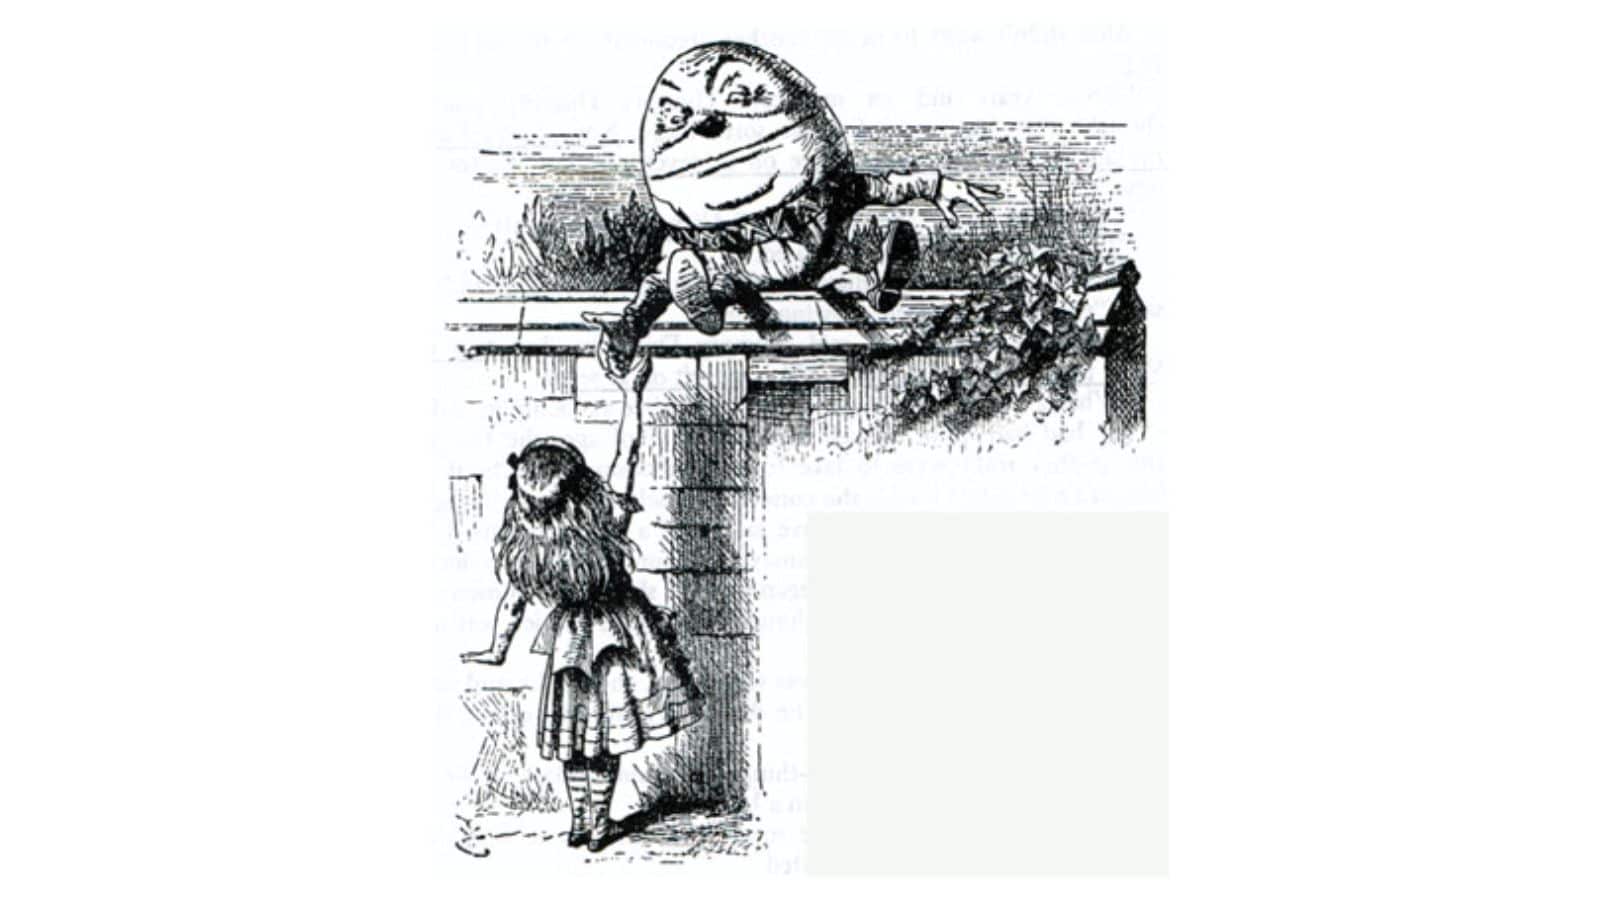 Alice meets Humpty Dumpty